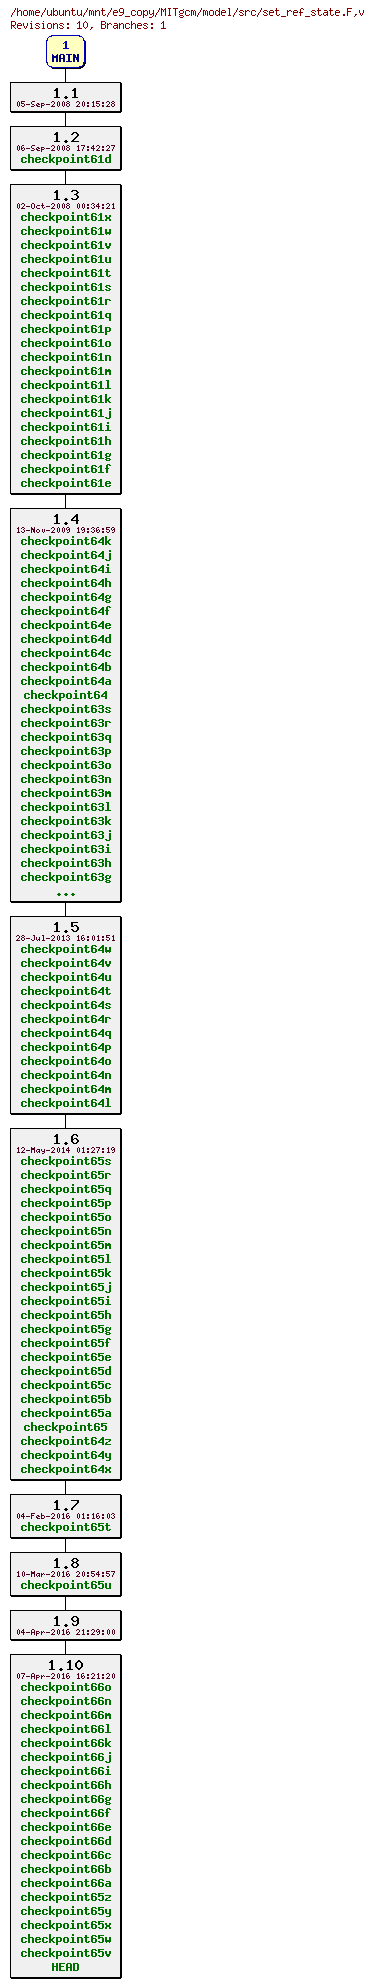 Revisions of MITgcm/model/src/set_ref_state.F